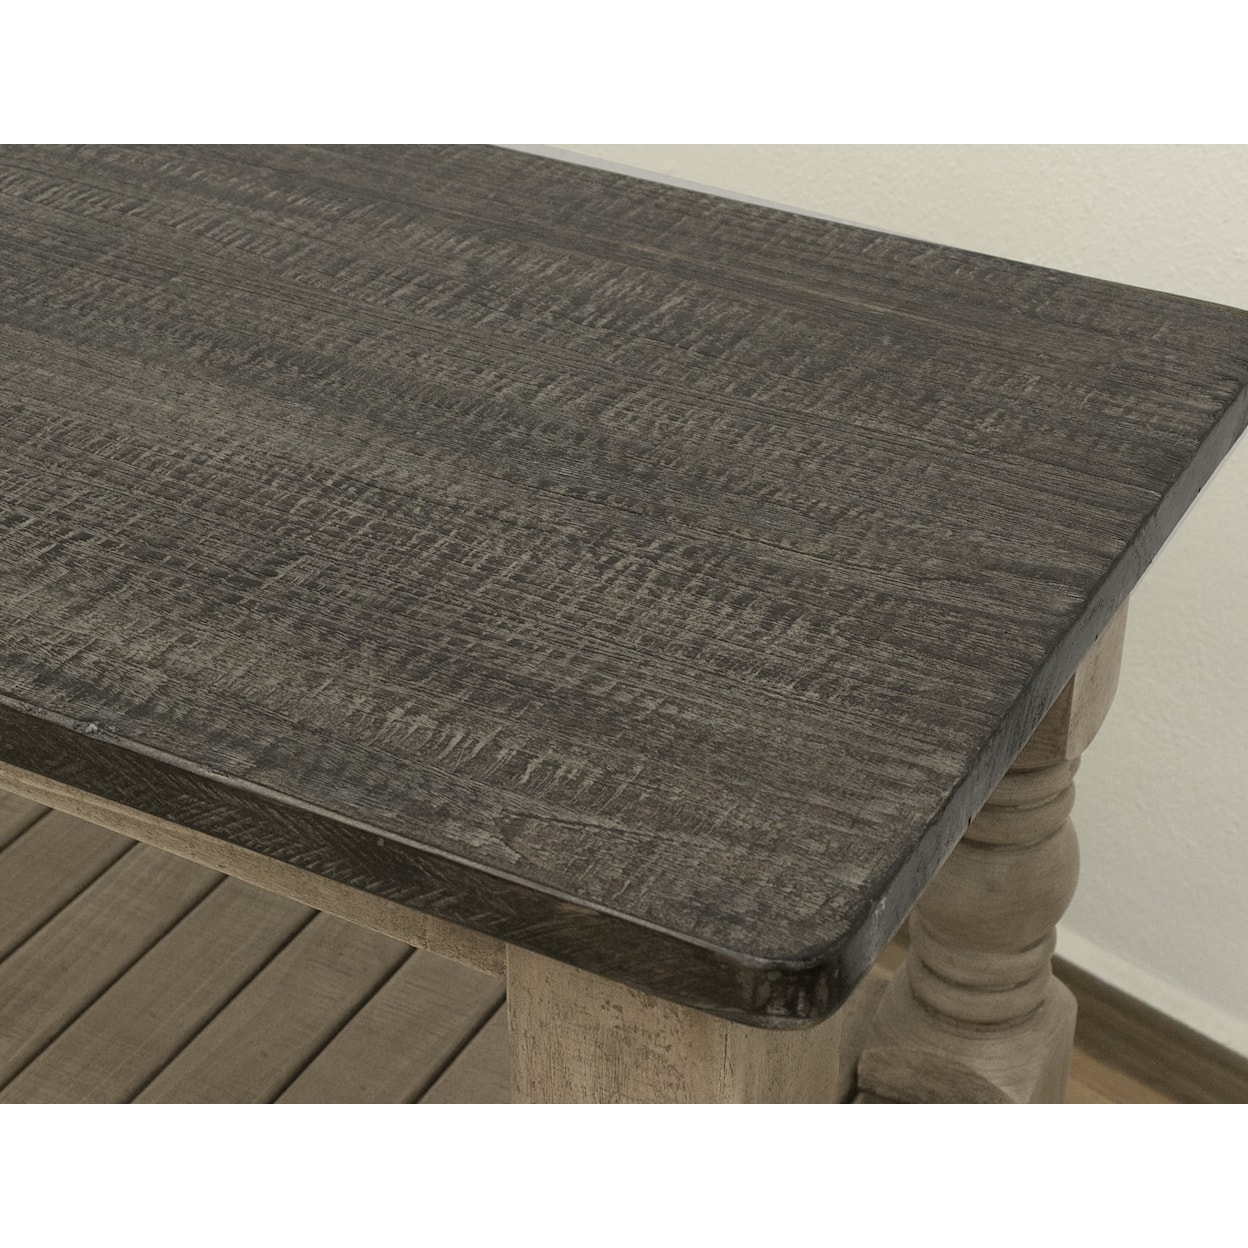 VFM Signature Natural Stone Sofa Table